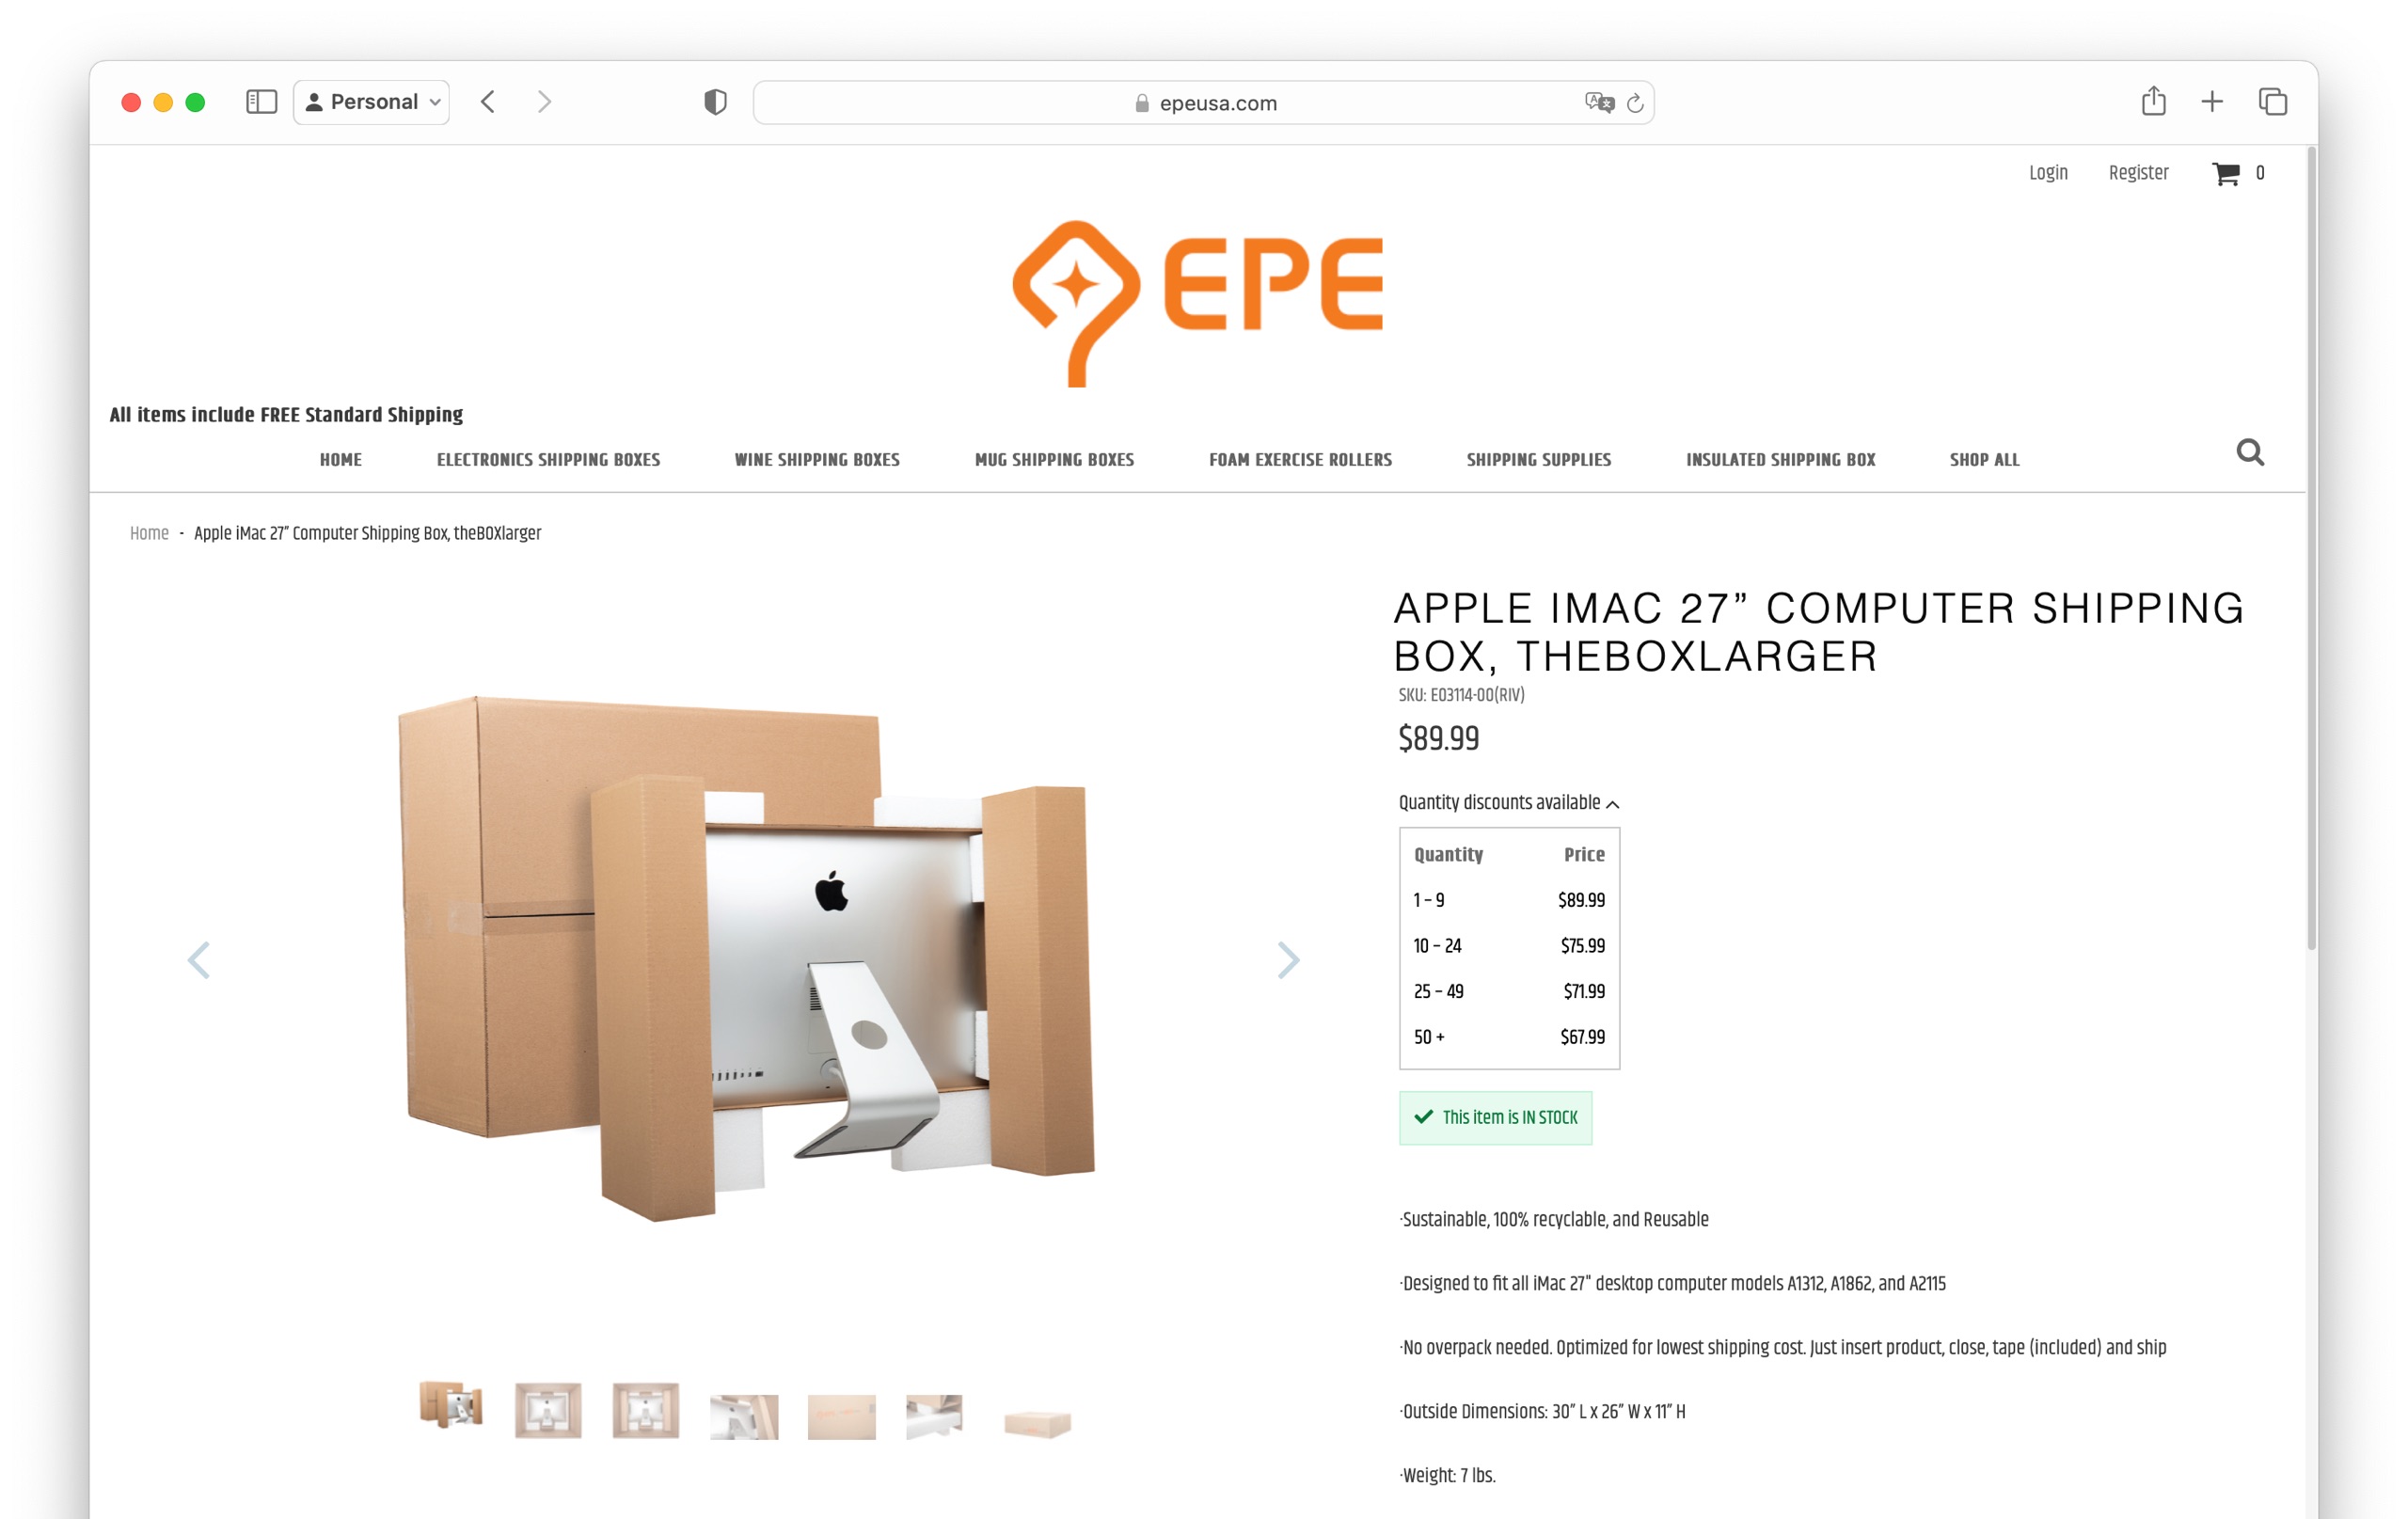 EPE USA Apple iMac 24 Inch Desktop Computer Shipping Box official